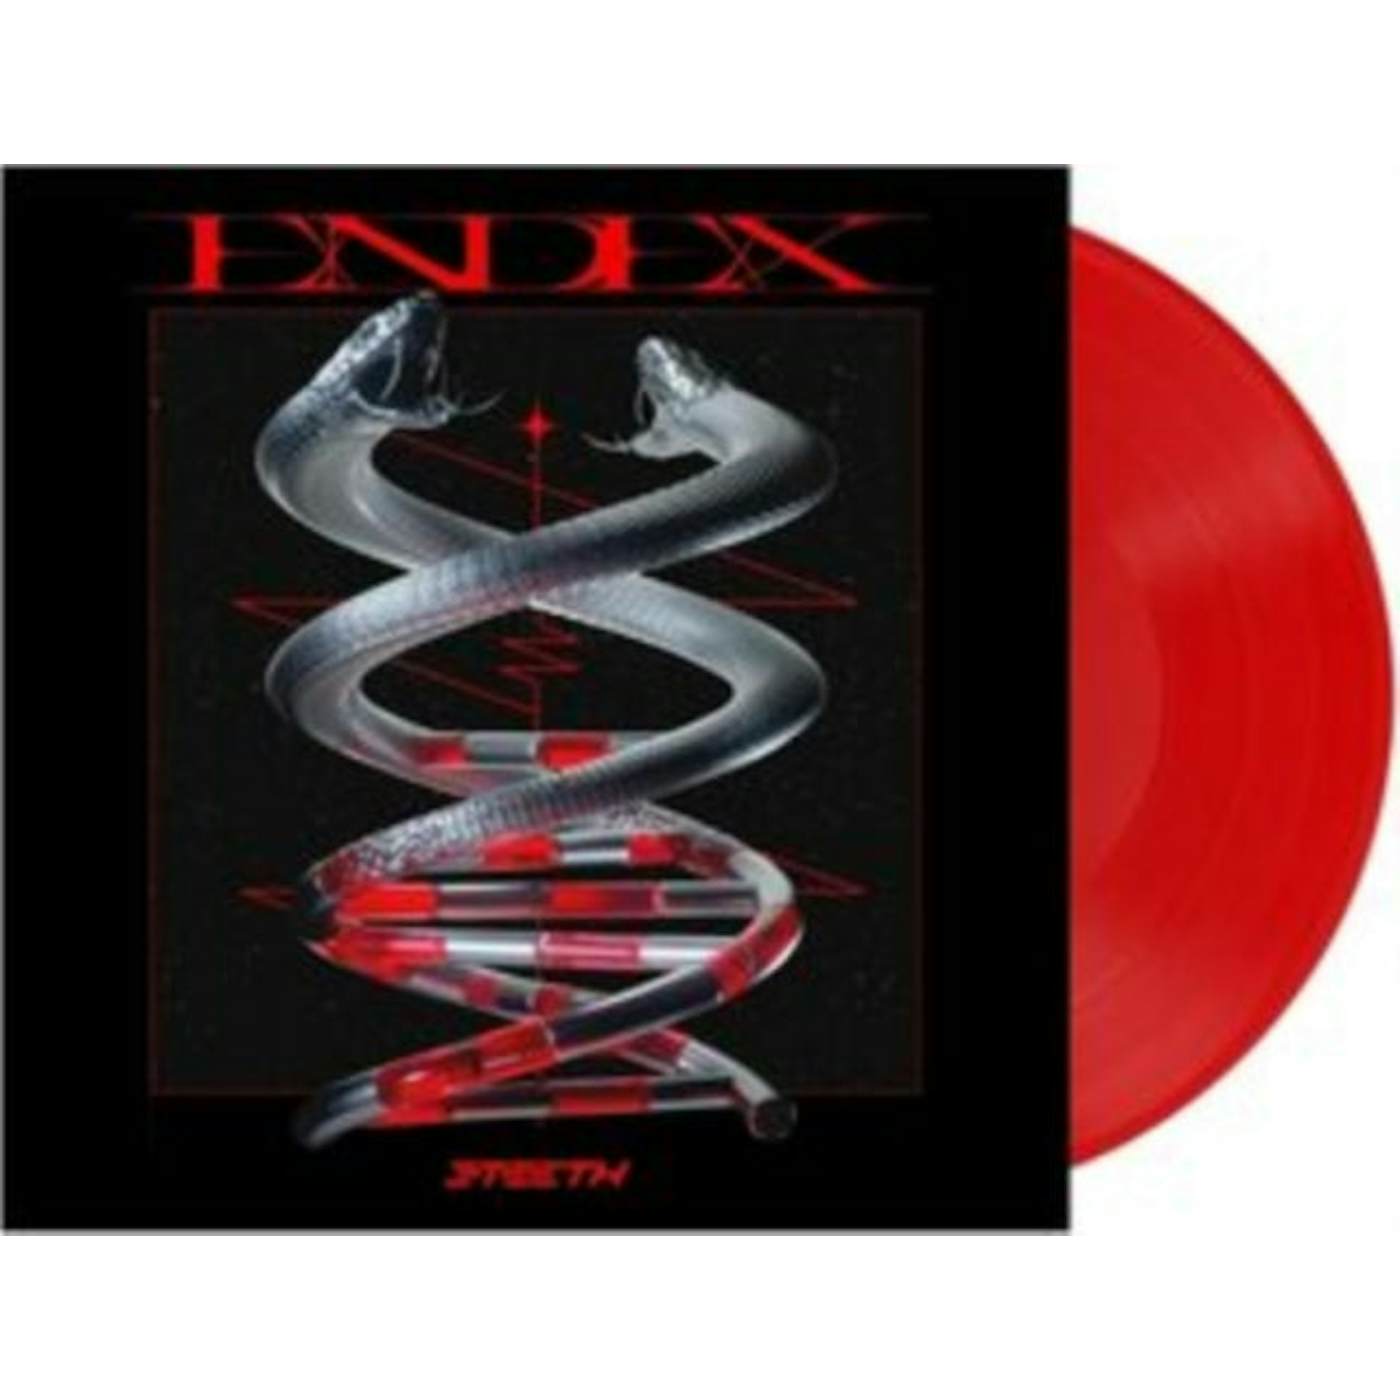 3Teeth LP - Endex (Vinyl)